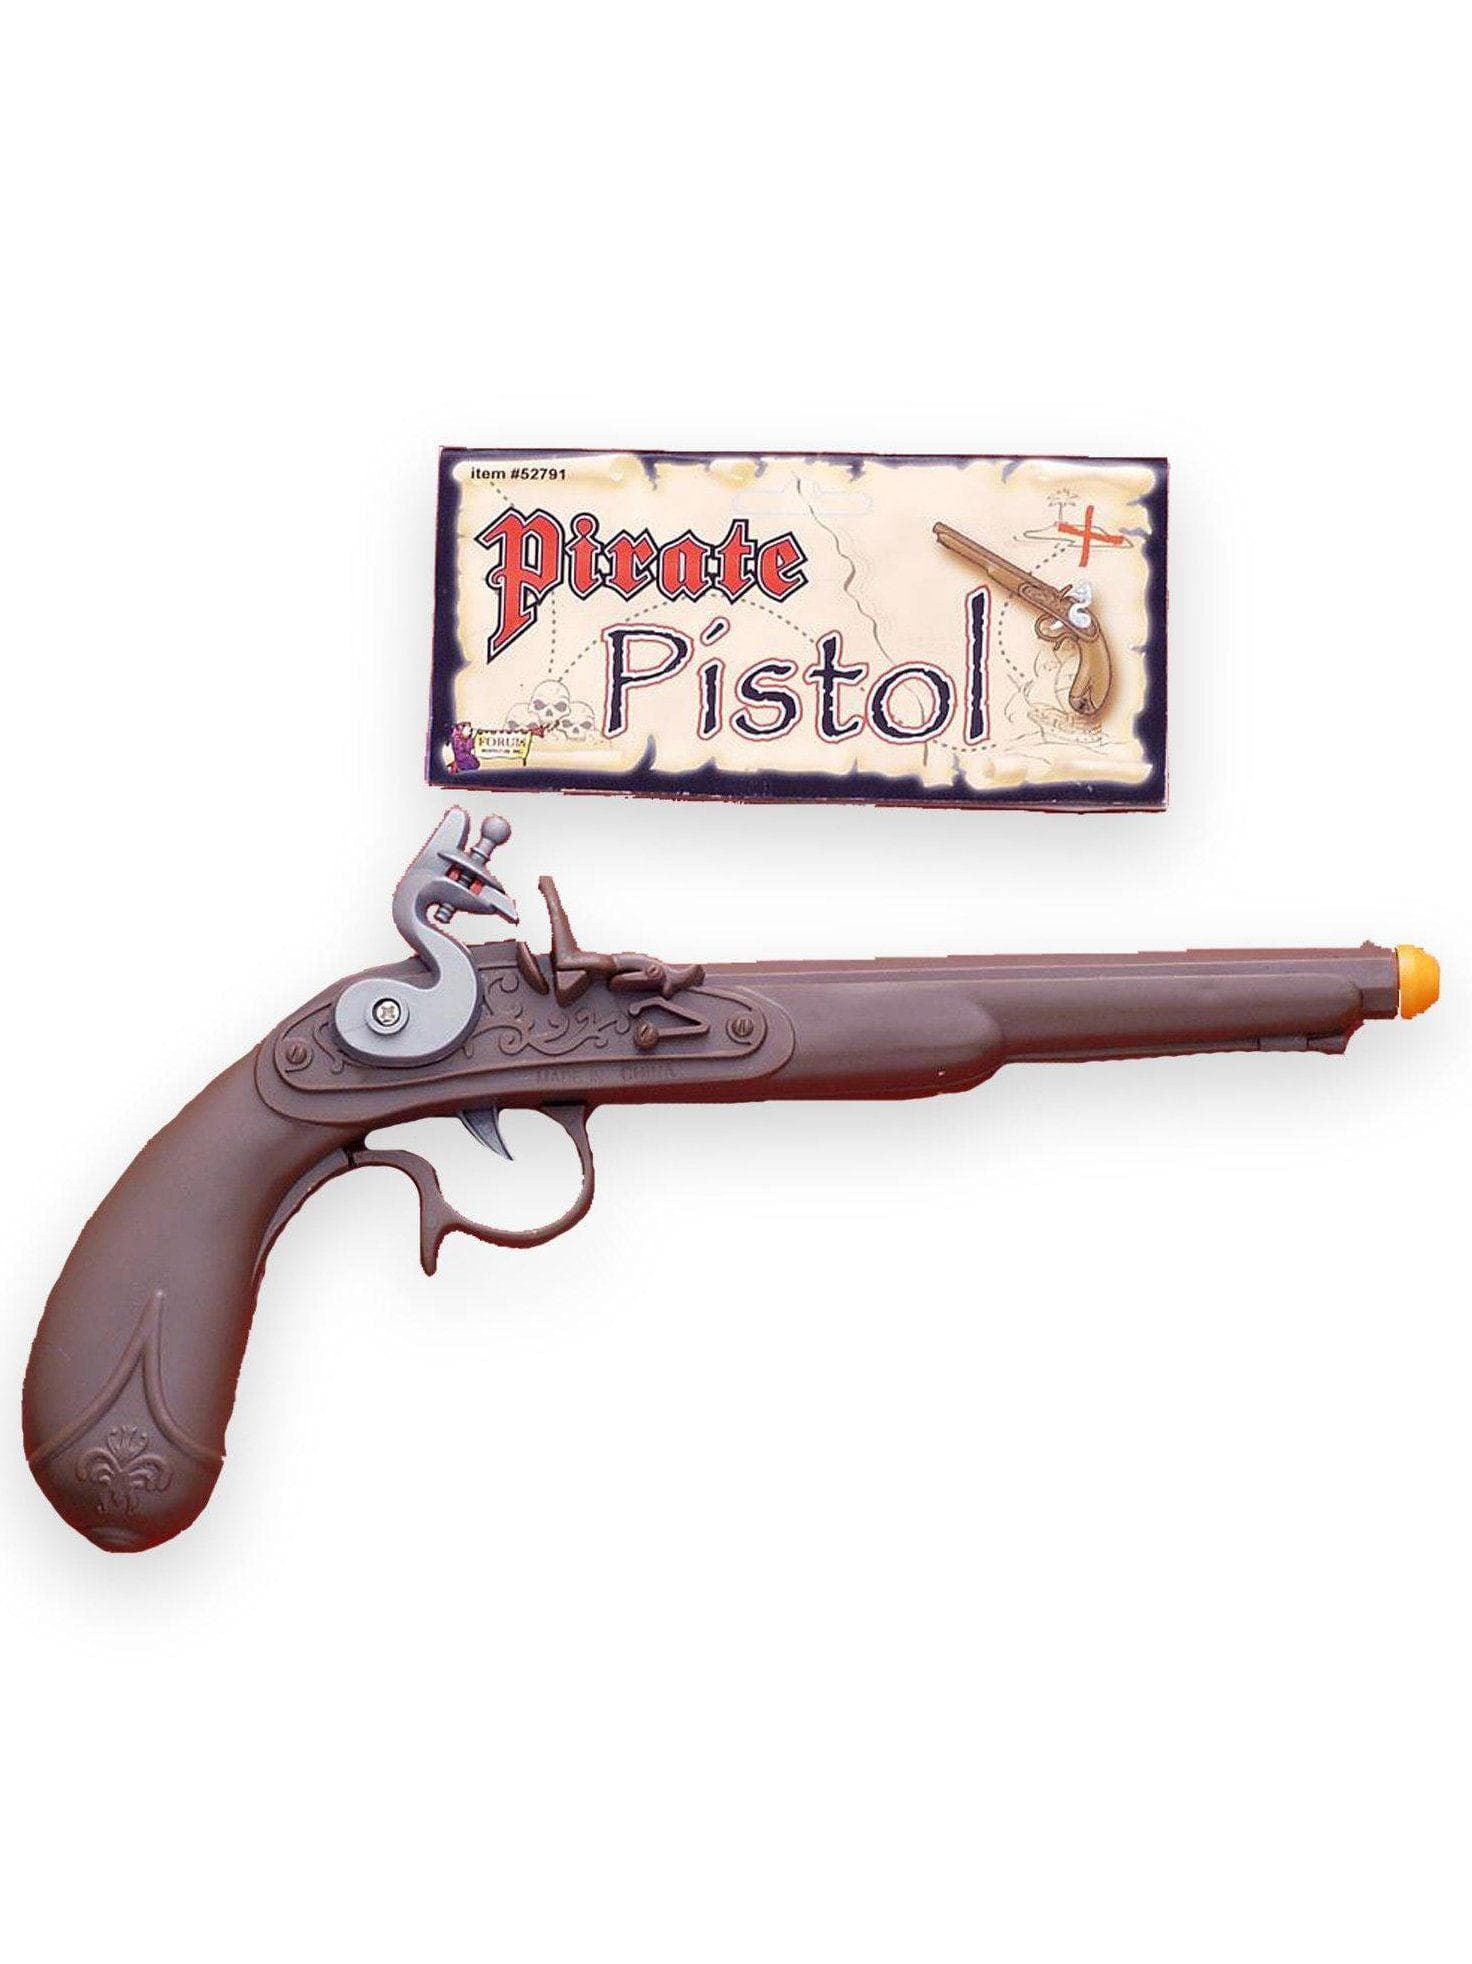 Pirate Pistol Weapon - costumes.com